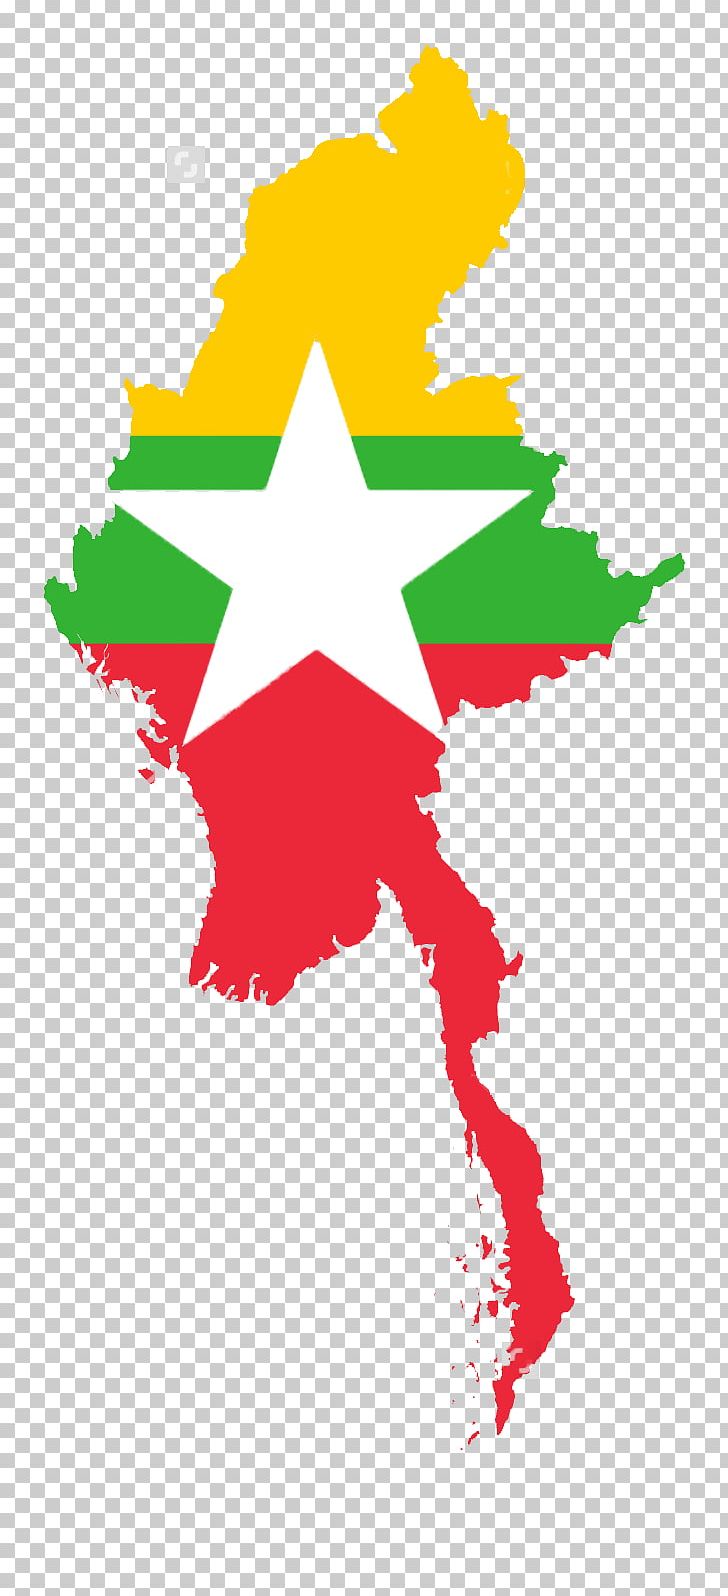 Burma Flag Of Myanmar National Flag Map PNG, Clipart, Art, Artwork, Asean, Blank Map, Burma Free PNG Download